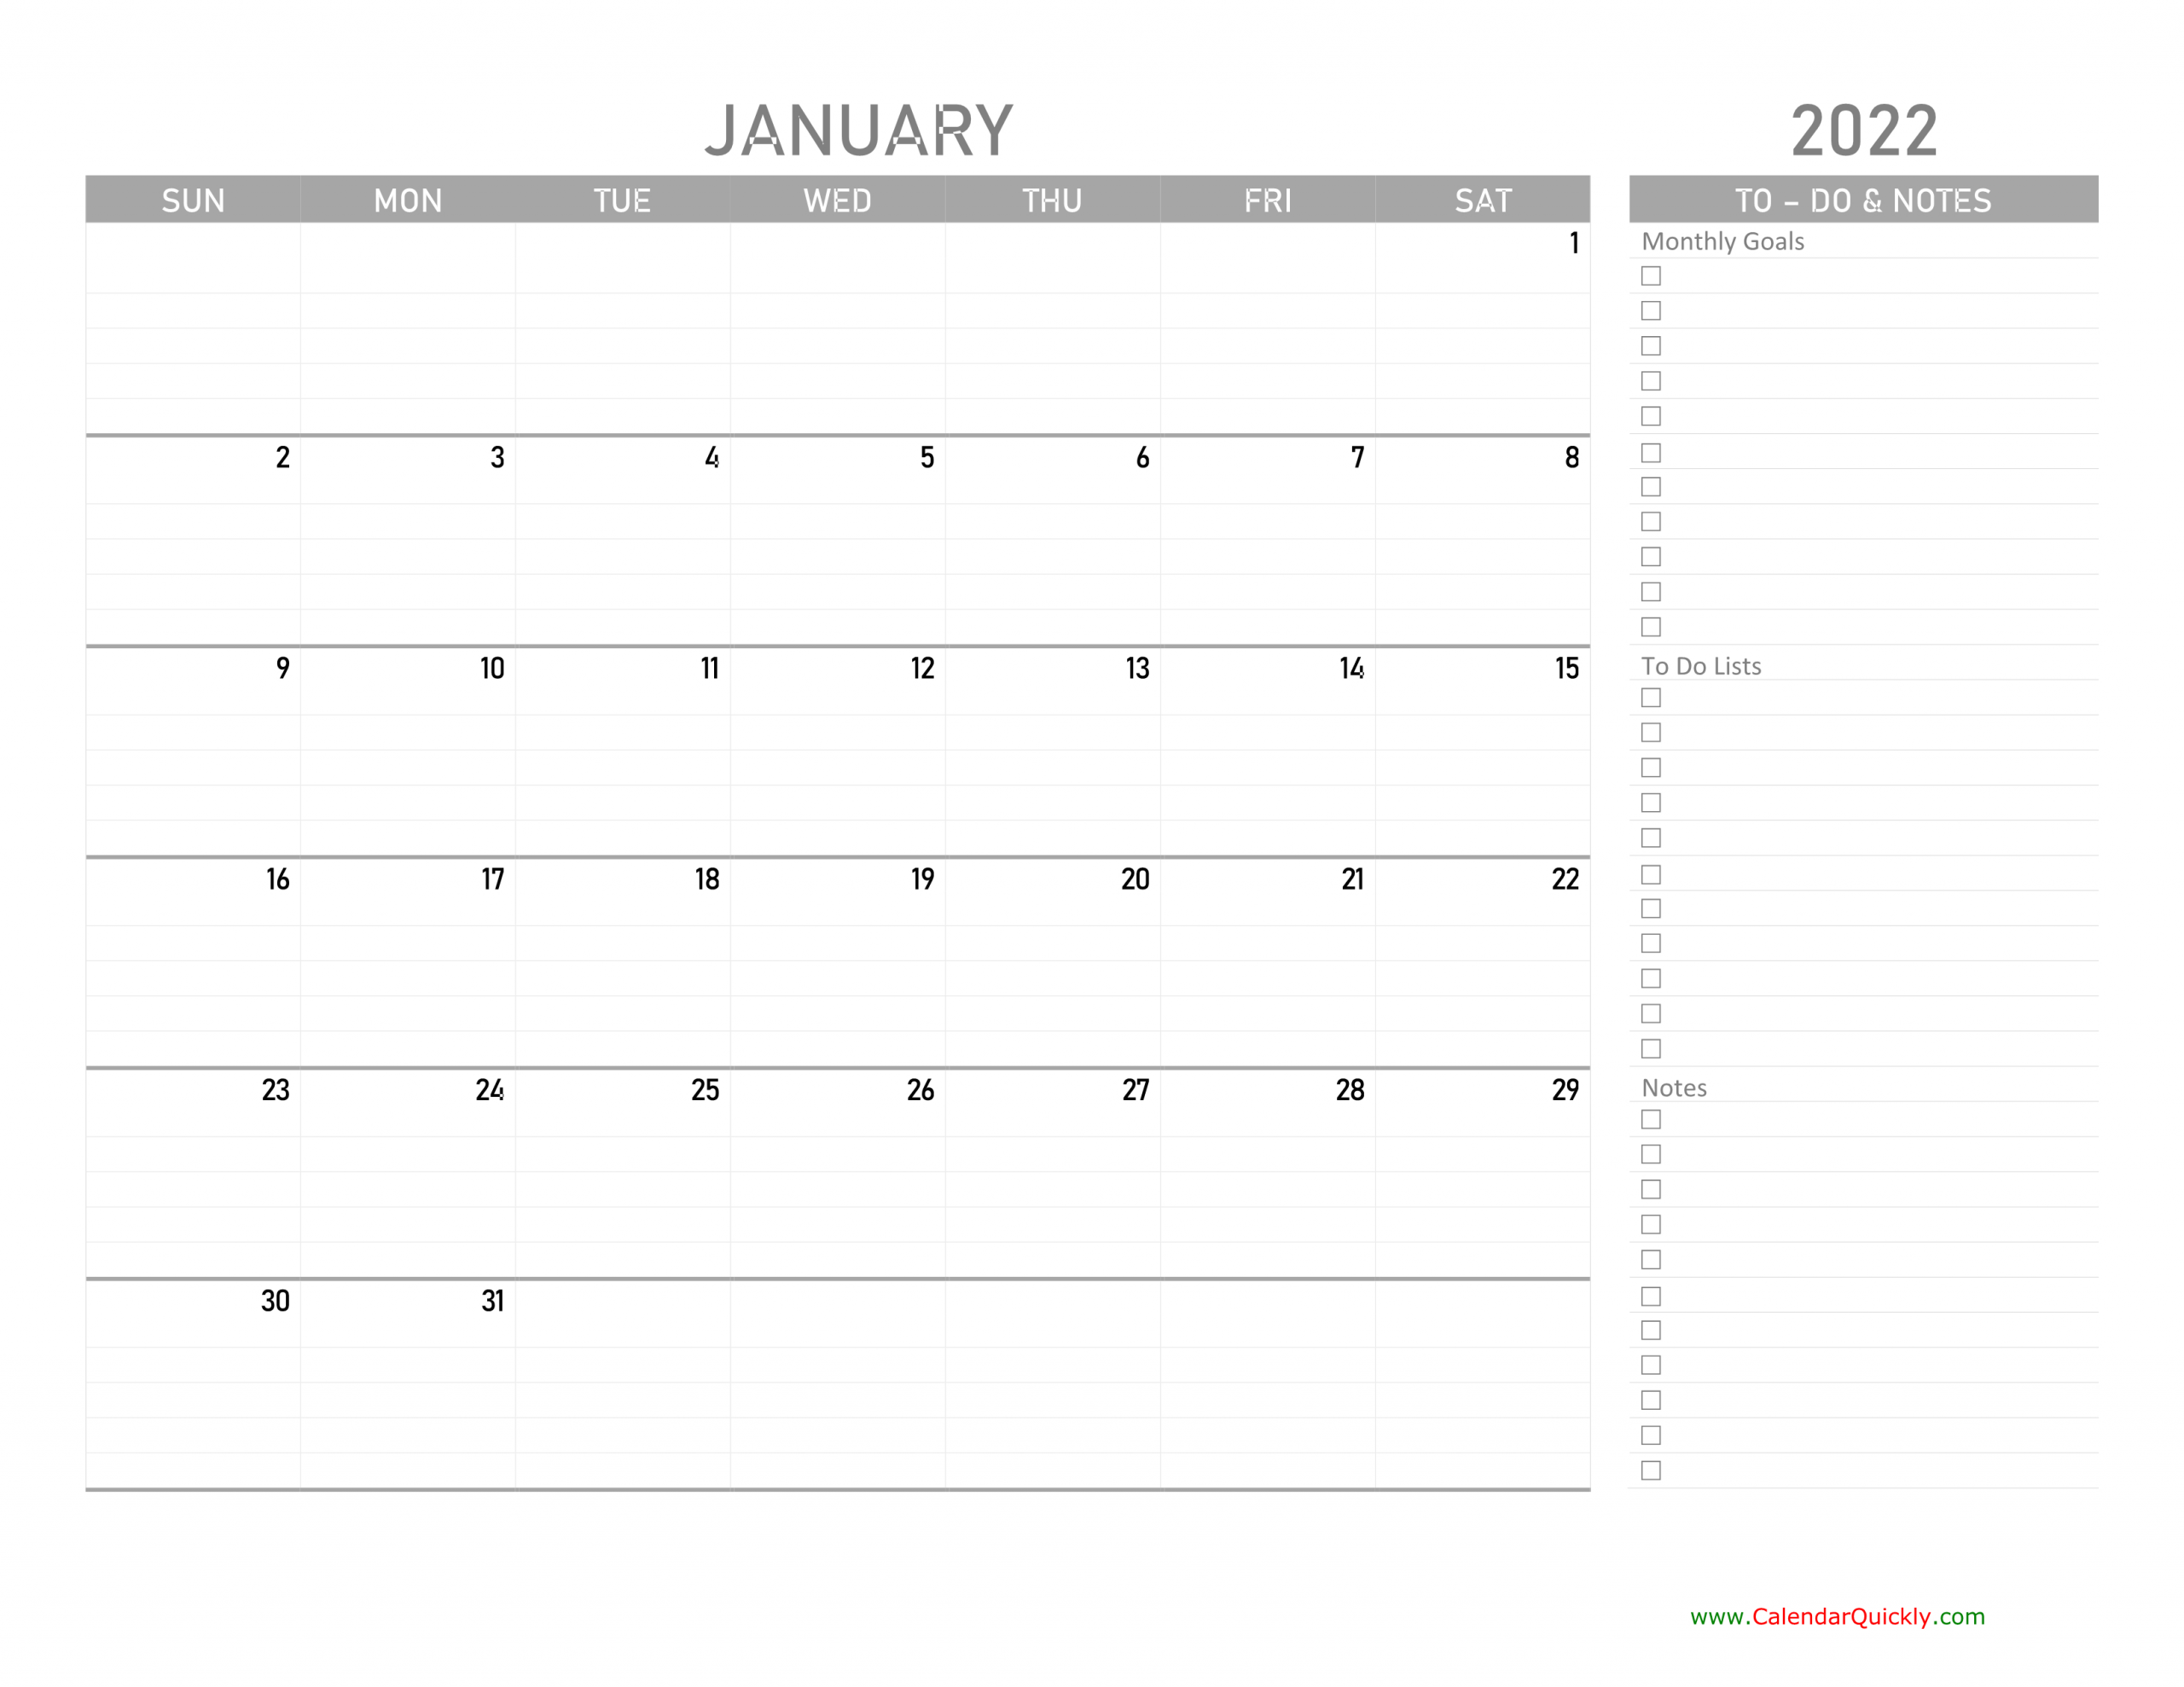 January 2022 Calendar With To-Do List | Calendar Quickly